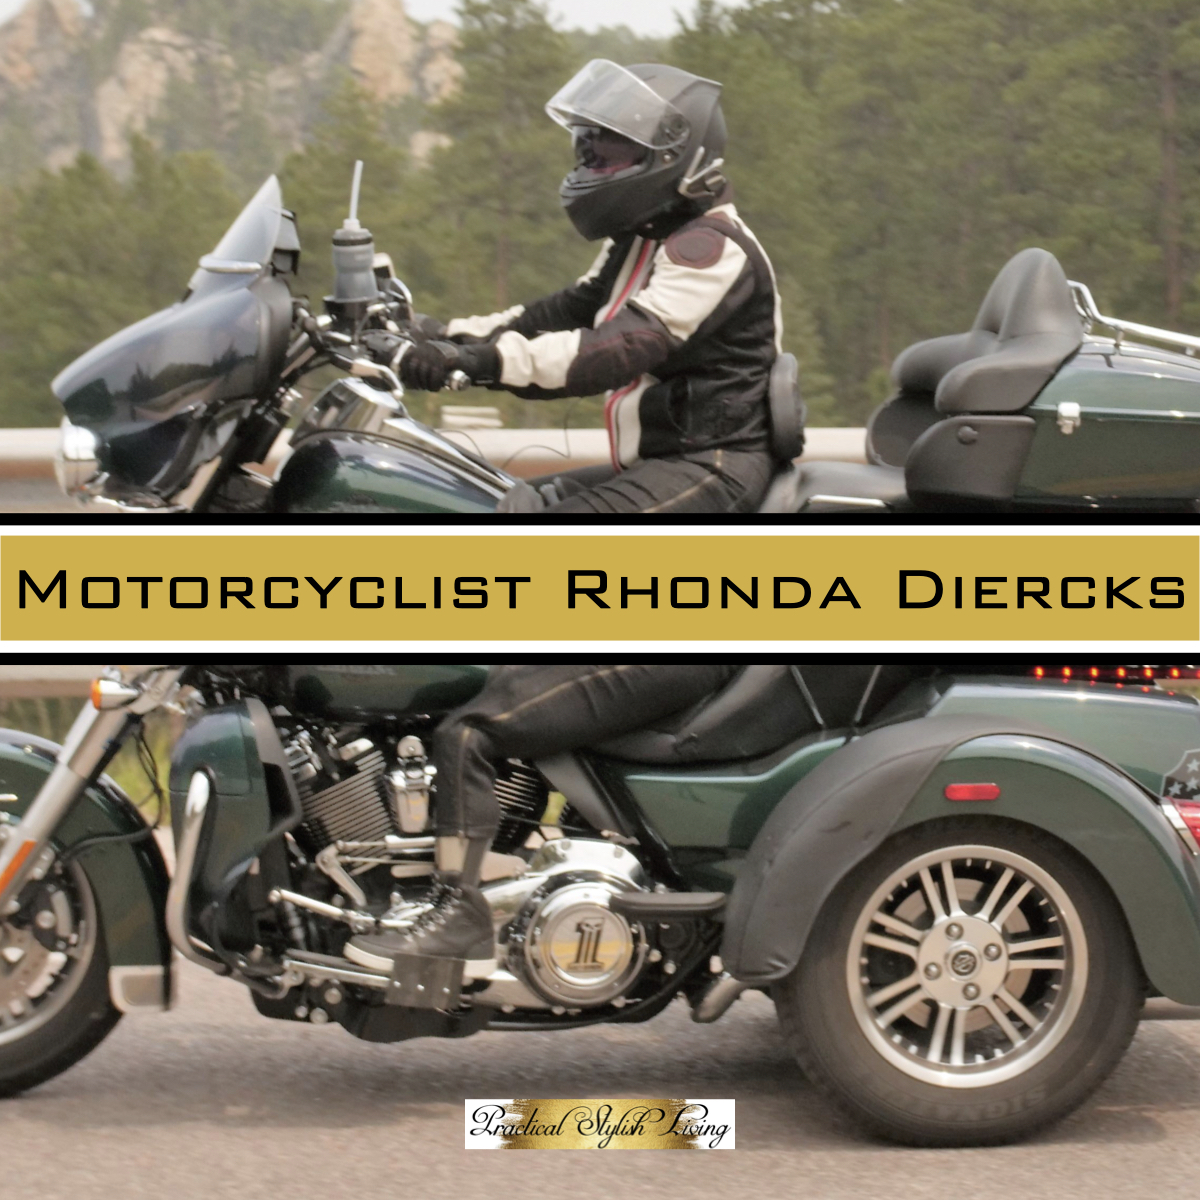 Motorcyclist Rhonda Diercks | Practical Stylish Living | Motorcycle Lifestyle